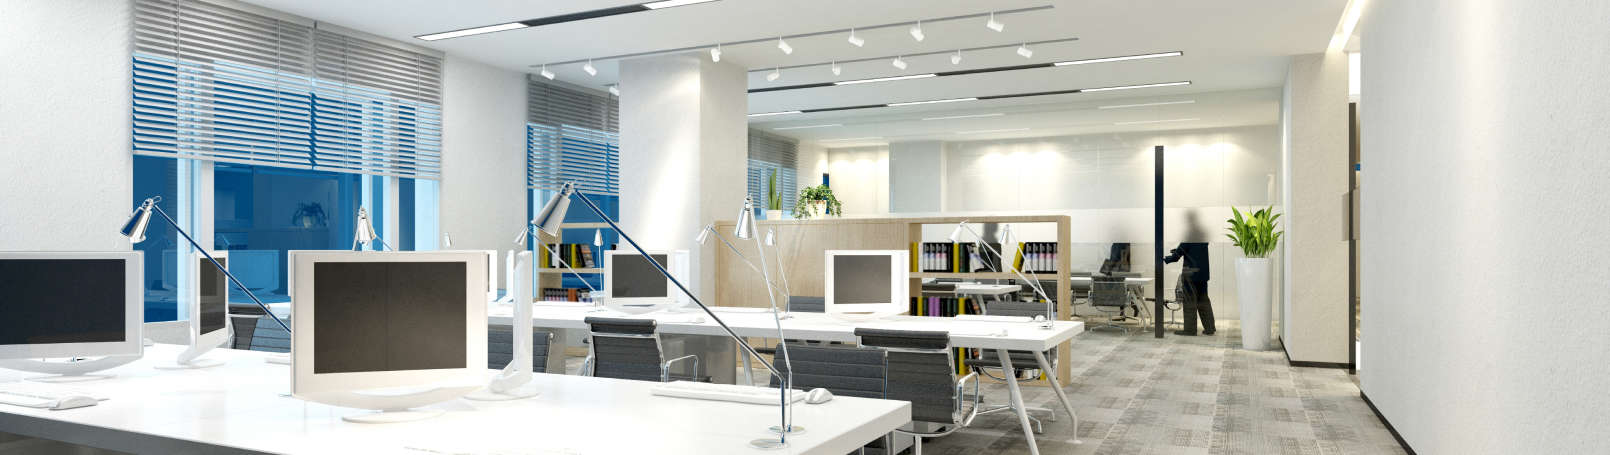 office-flooring-design